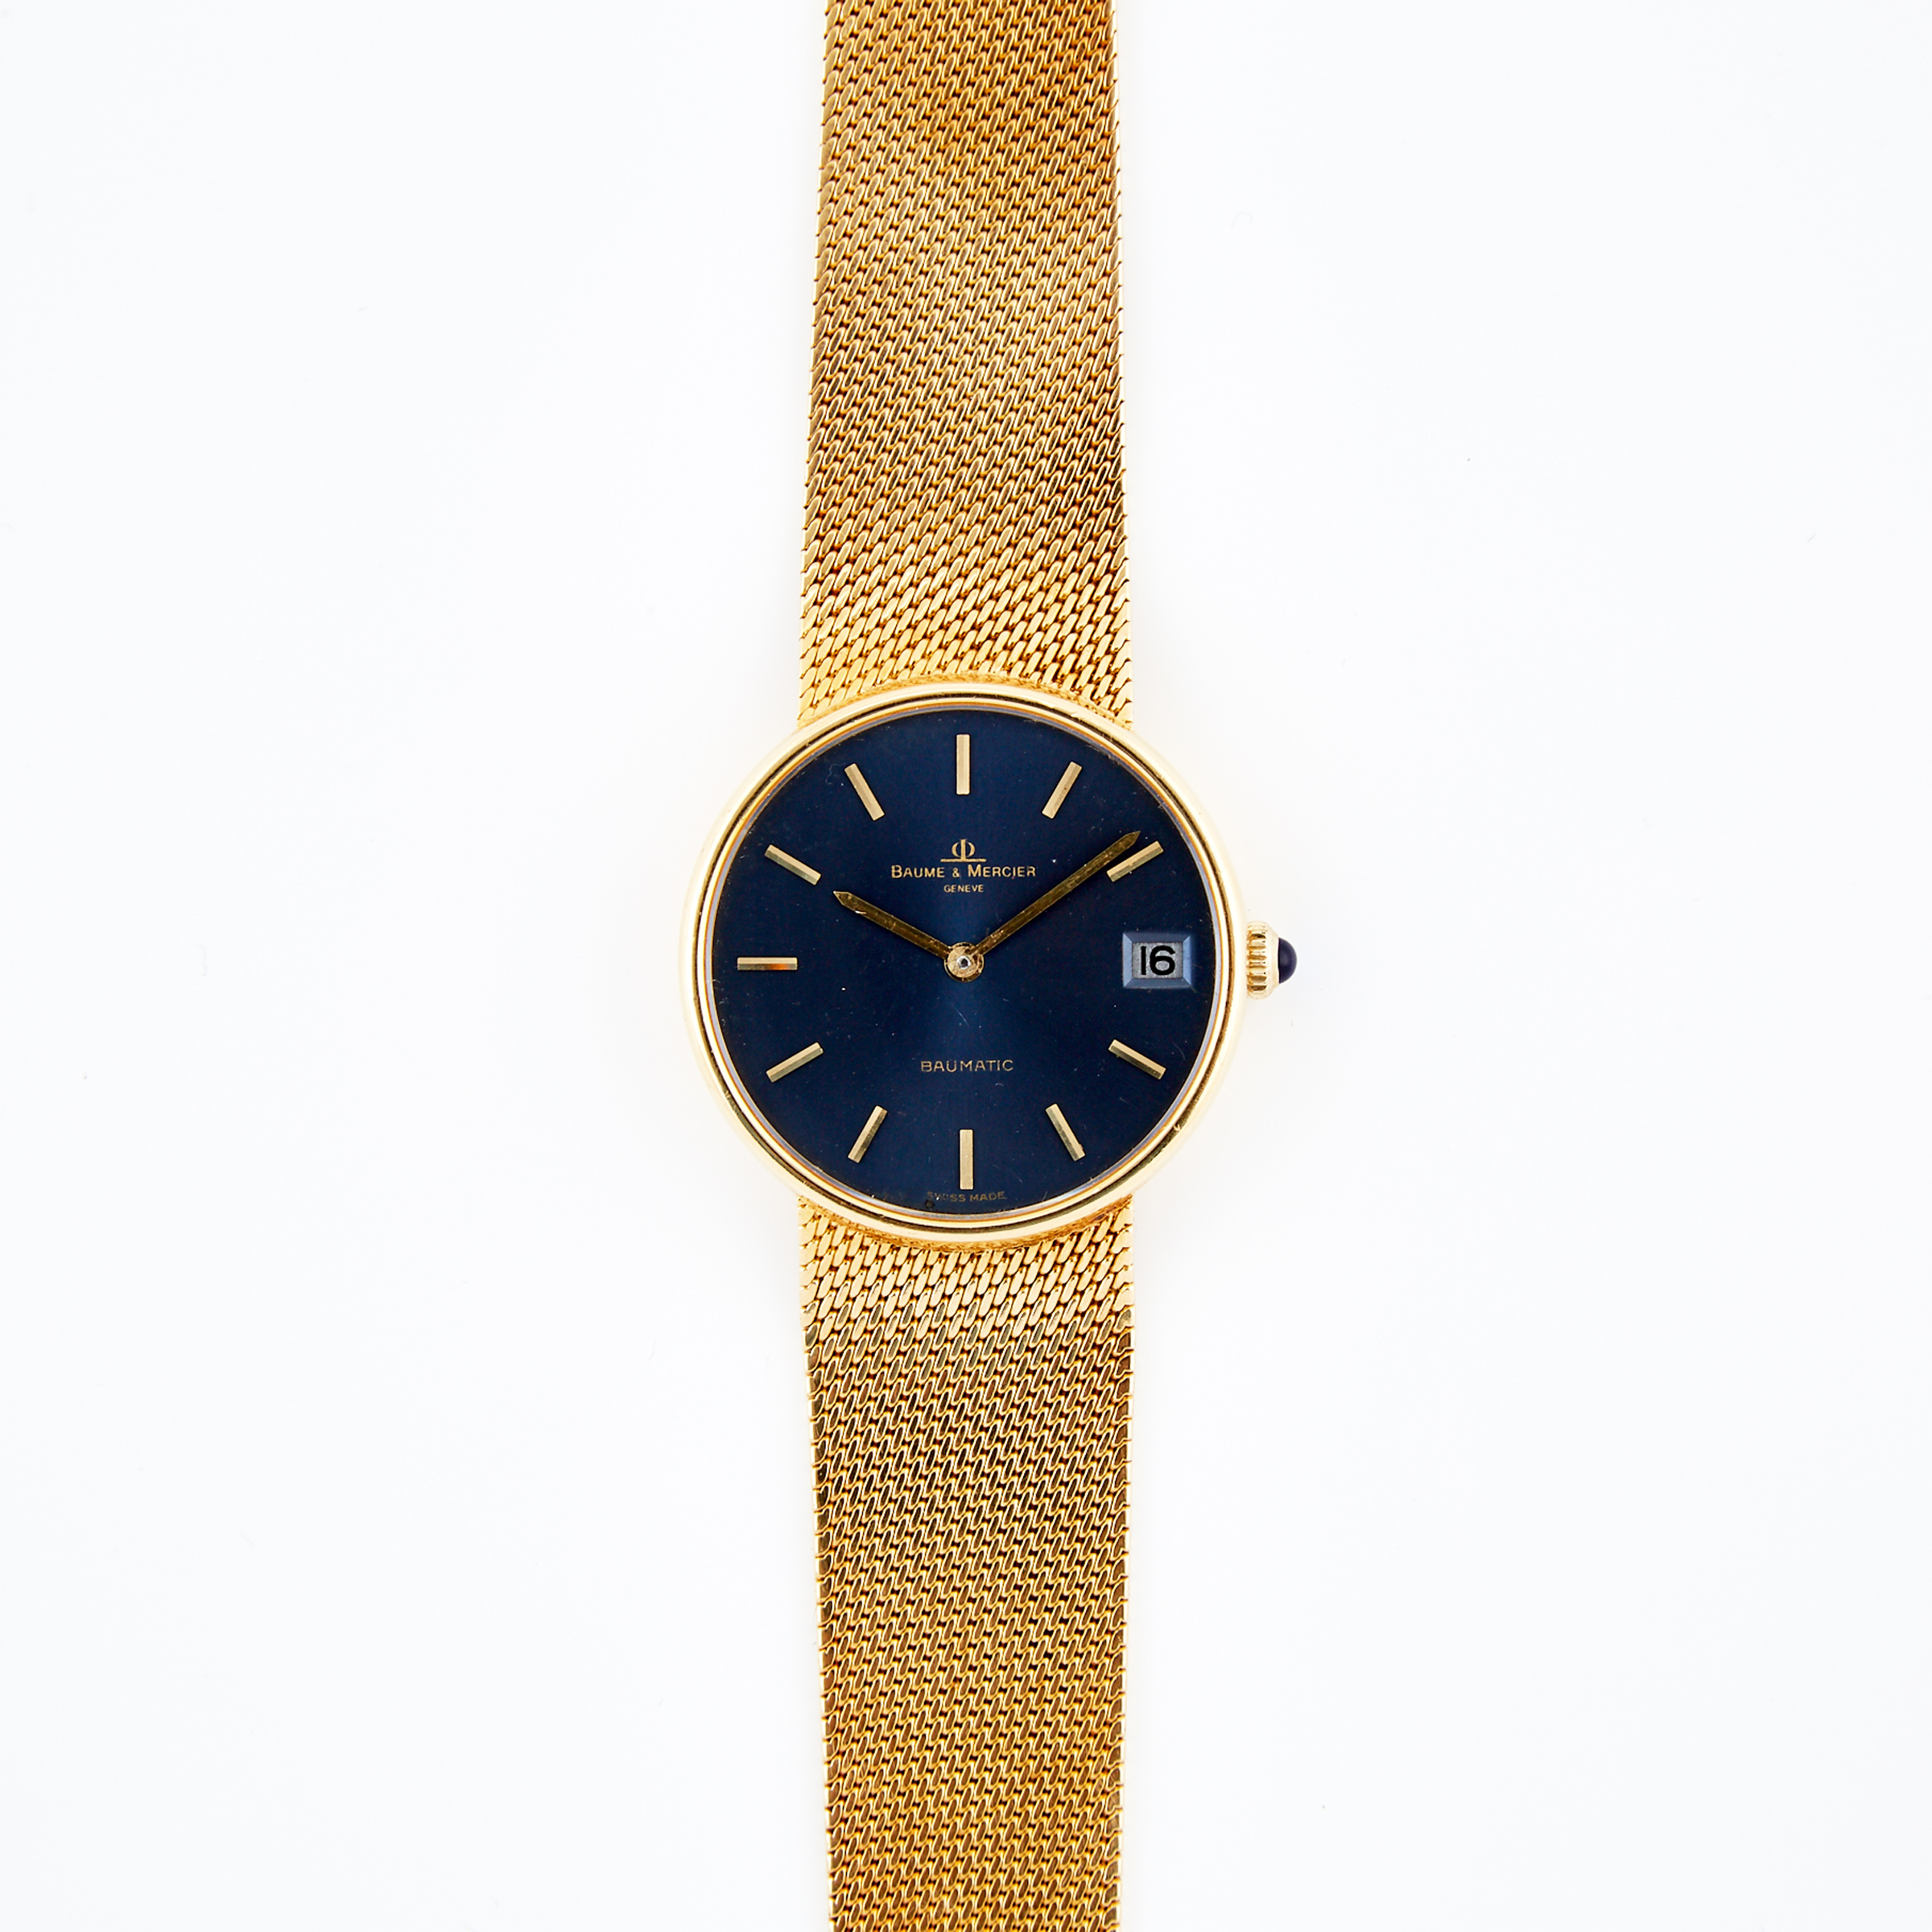 Baume & Mercier Baumatic Wristwatch With Date